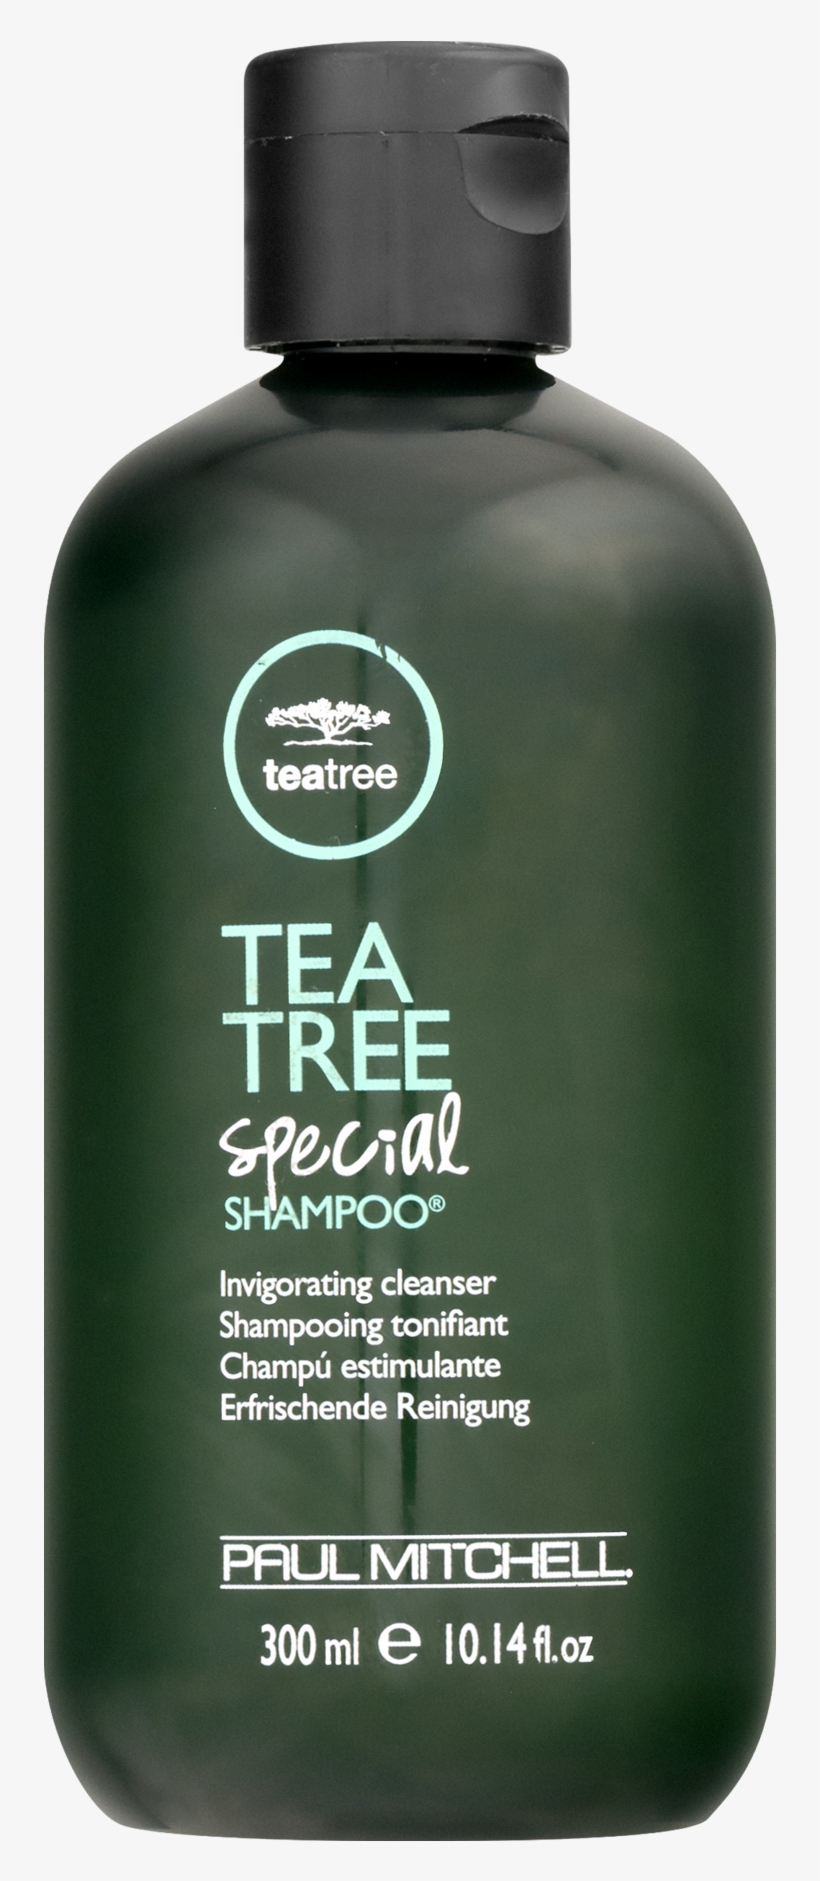 Paul Mitchell Tea Tree Special Shampoo, - Paul Mitchell Tea Tree Shampoo Review, transparent png #2342700